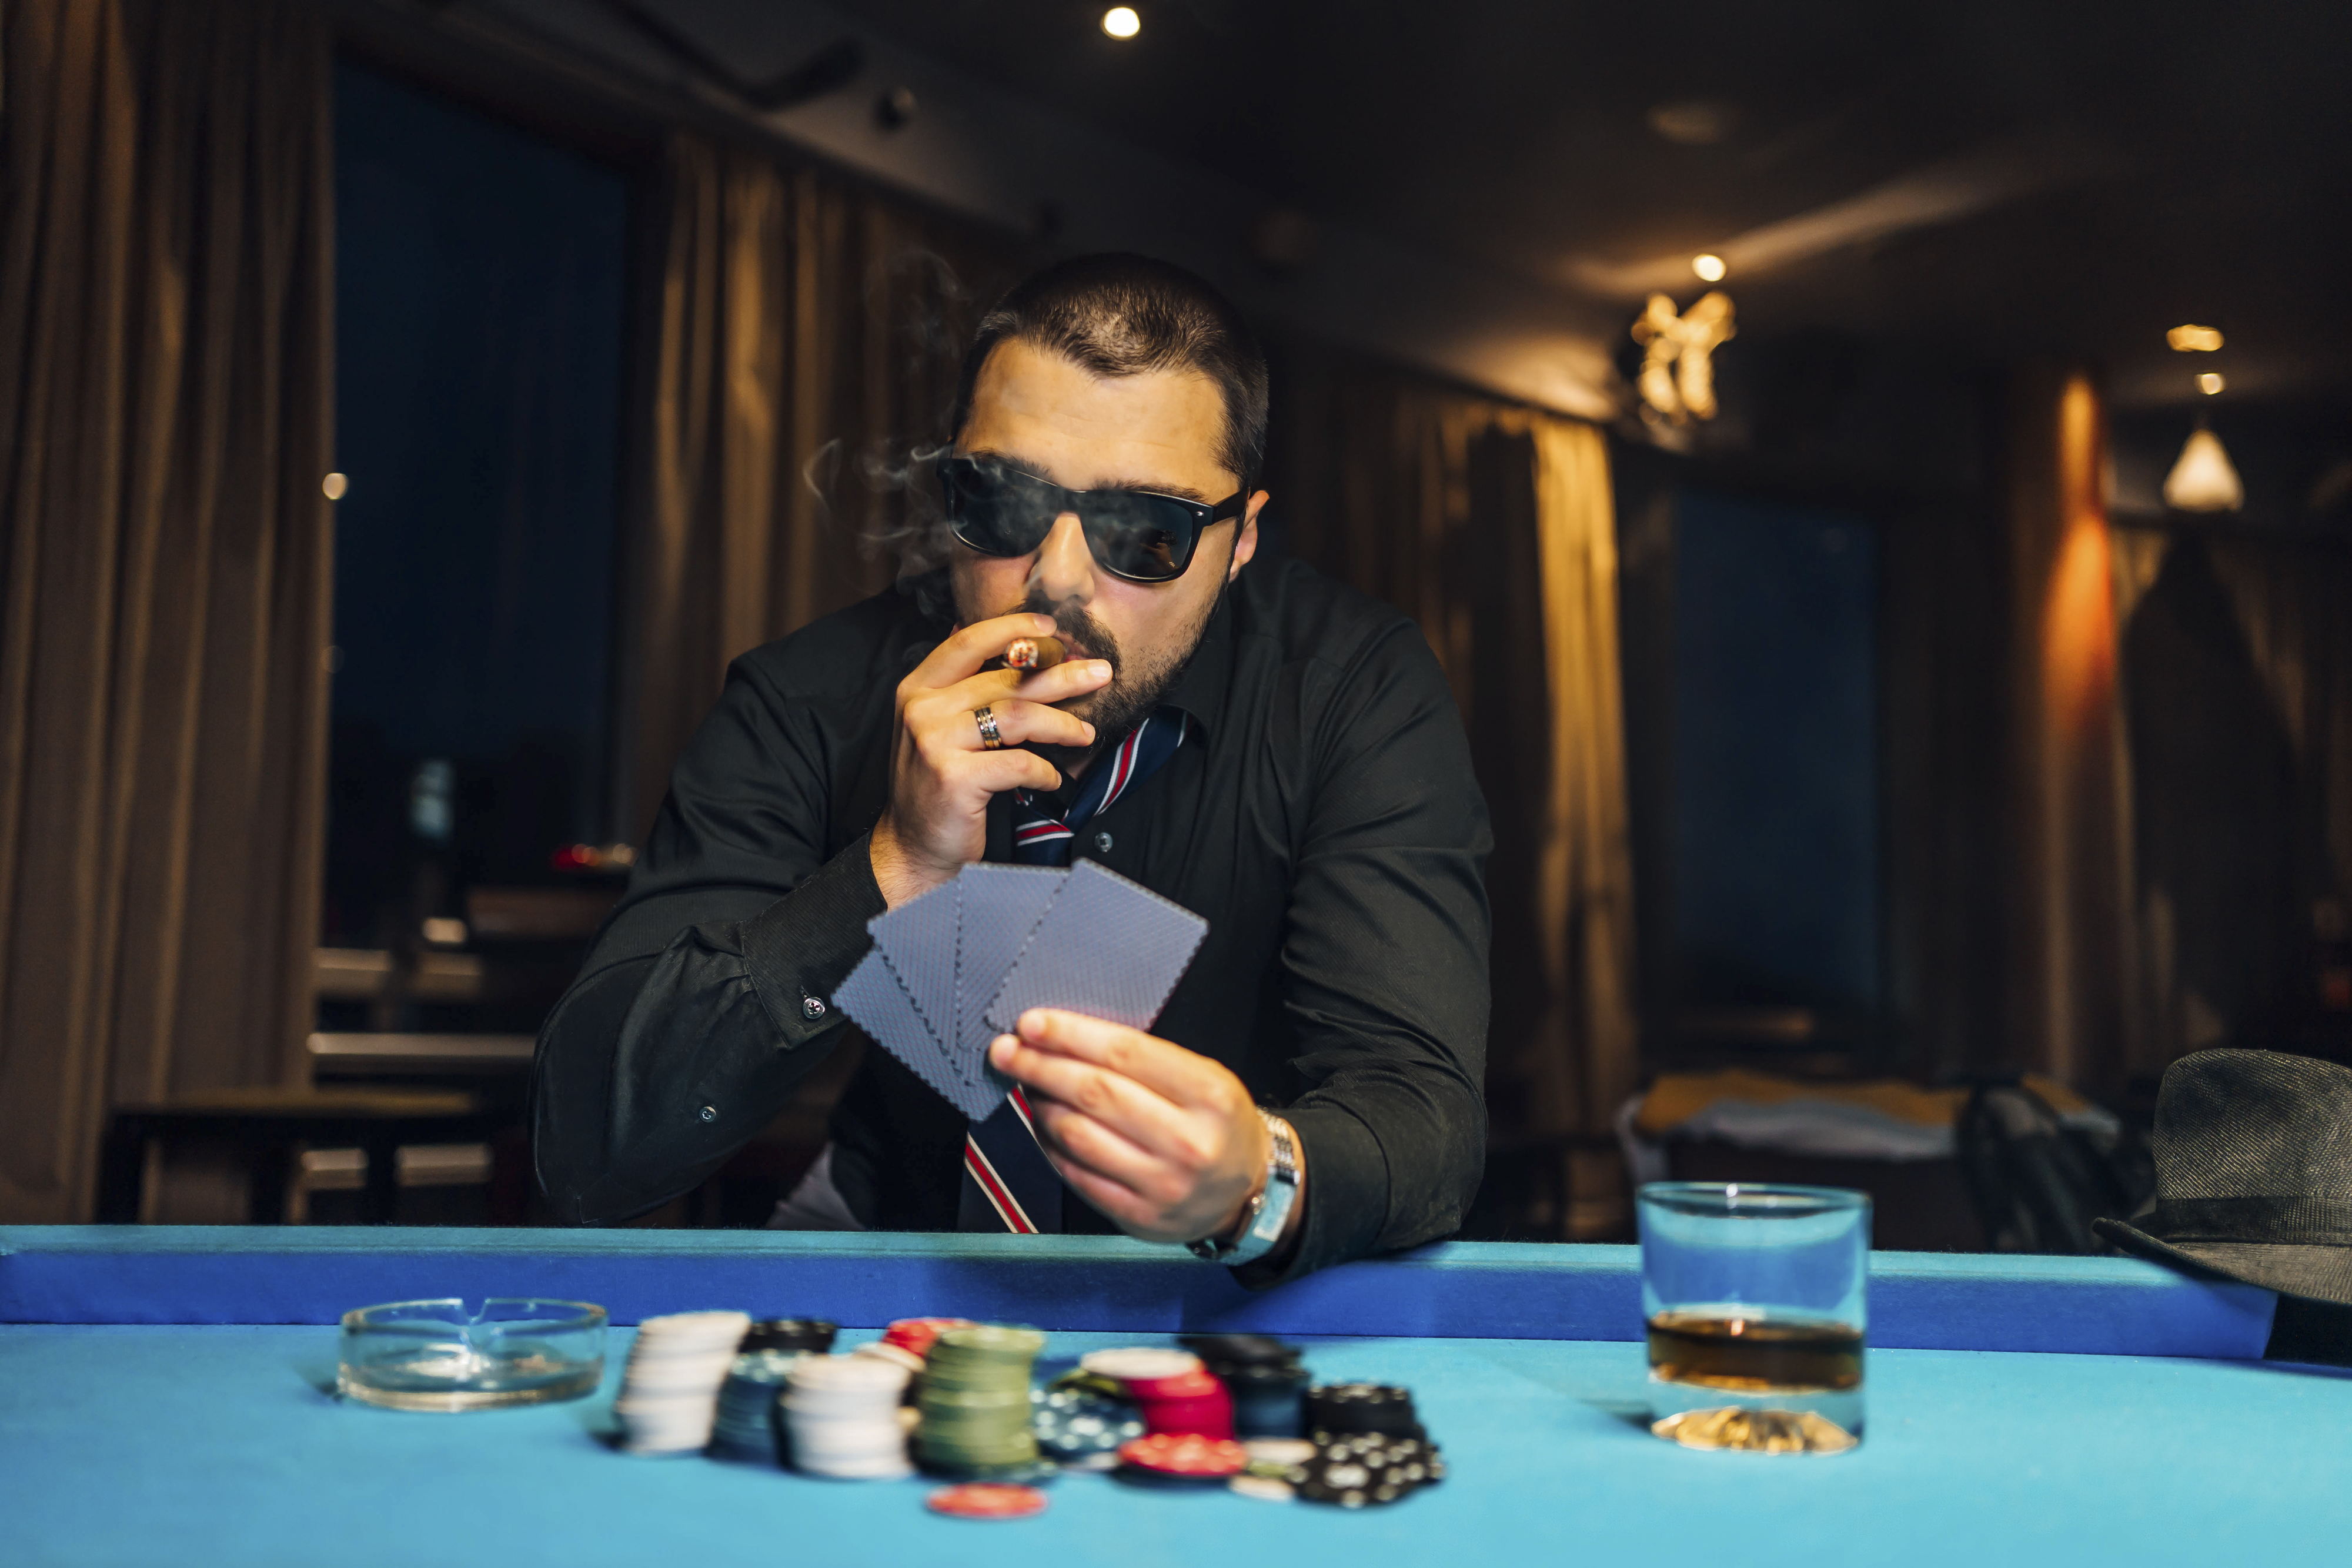 A man playing poker and smoking a cigar